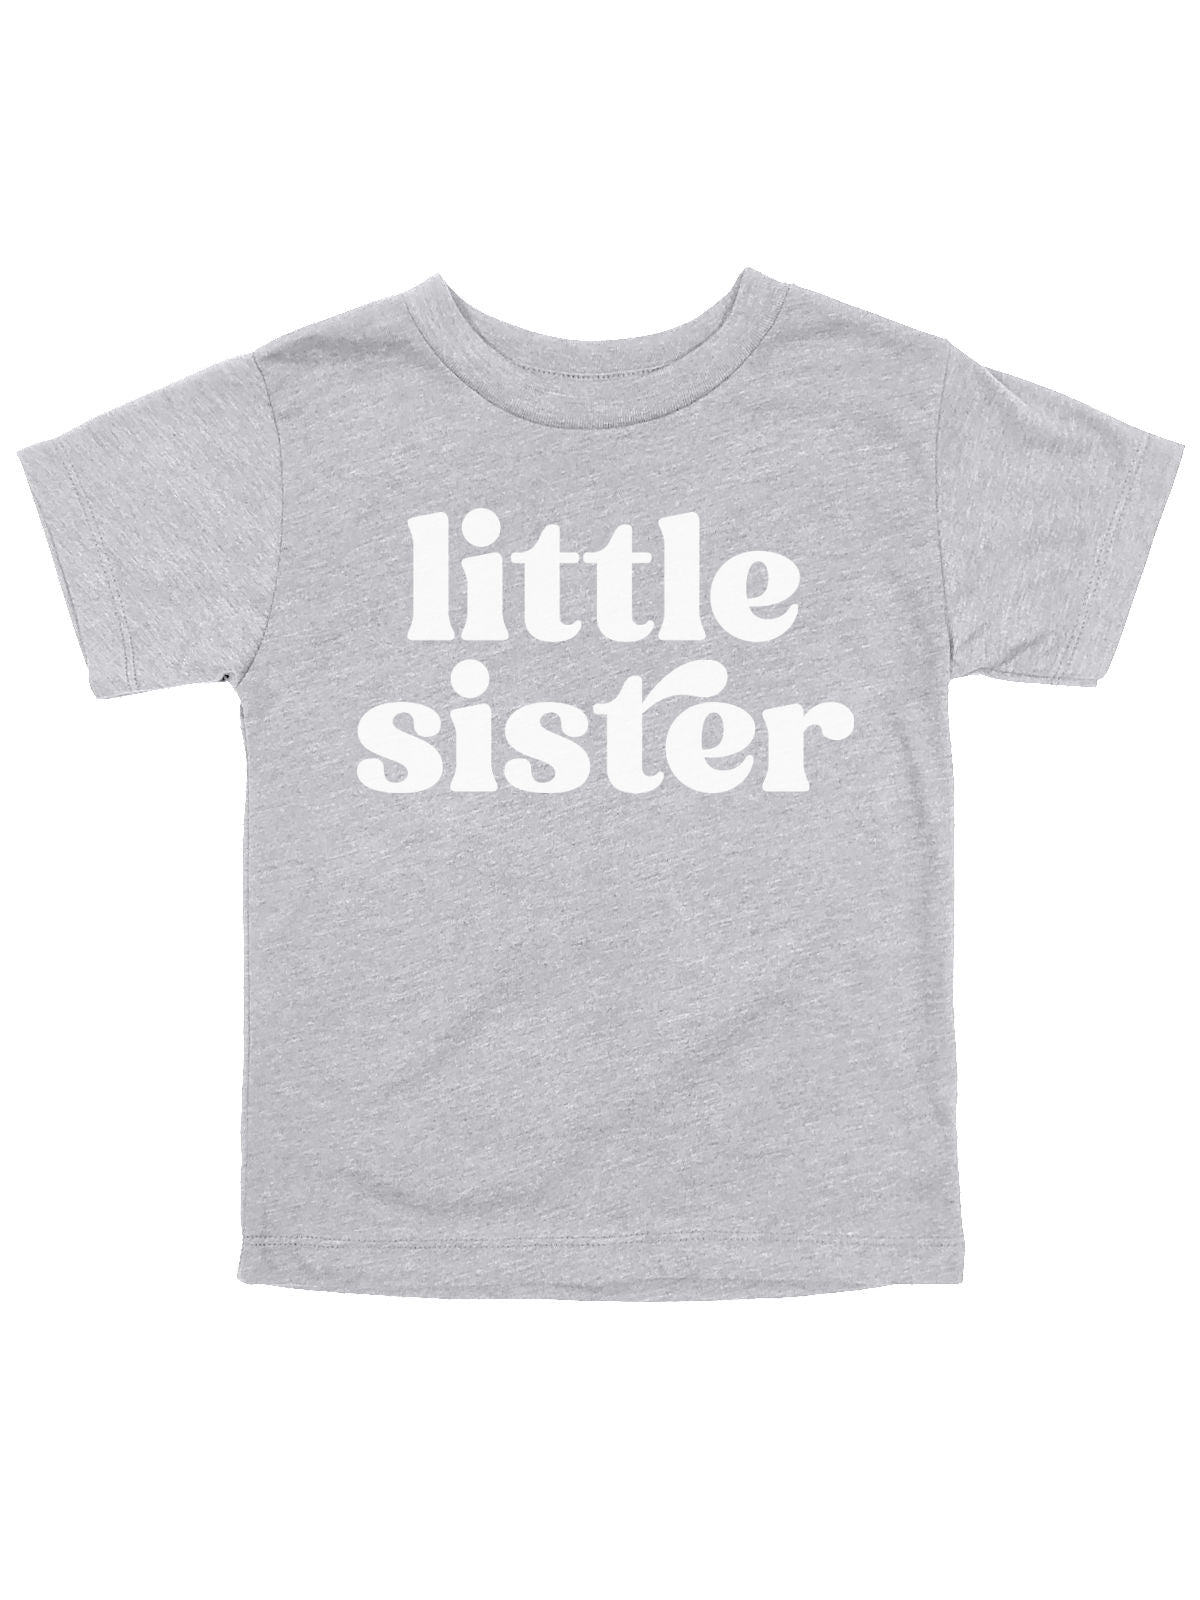 Little Sister Girls Shirt in Heather Gray